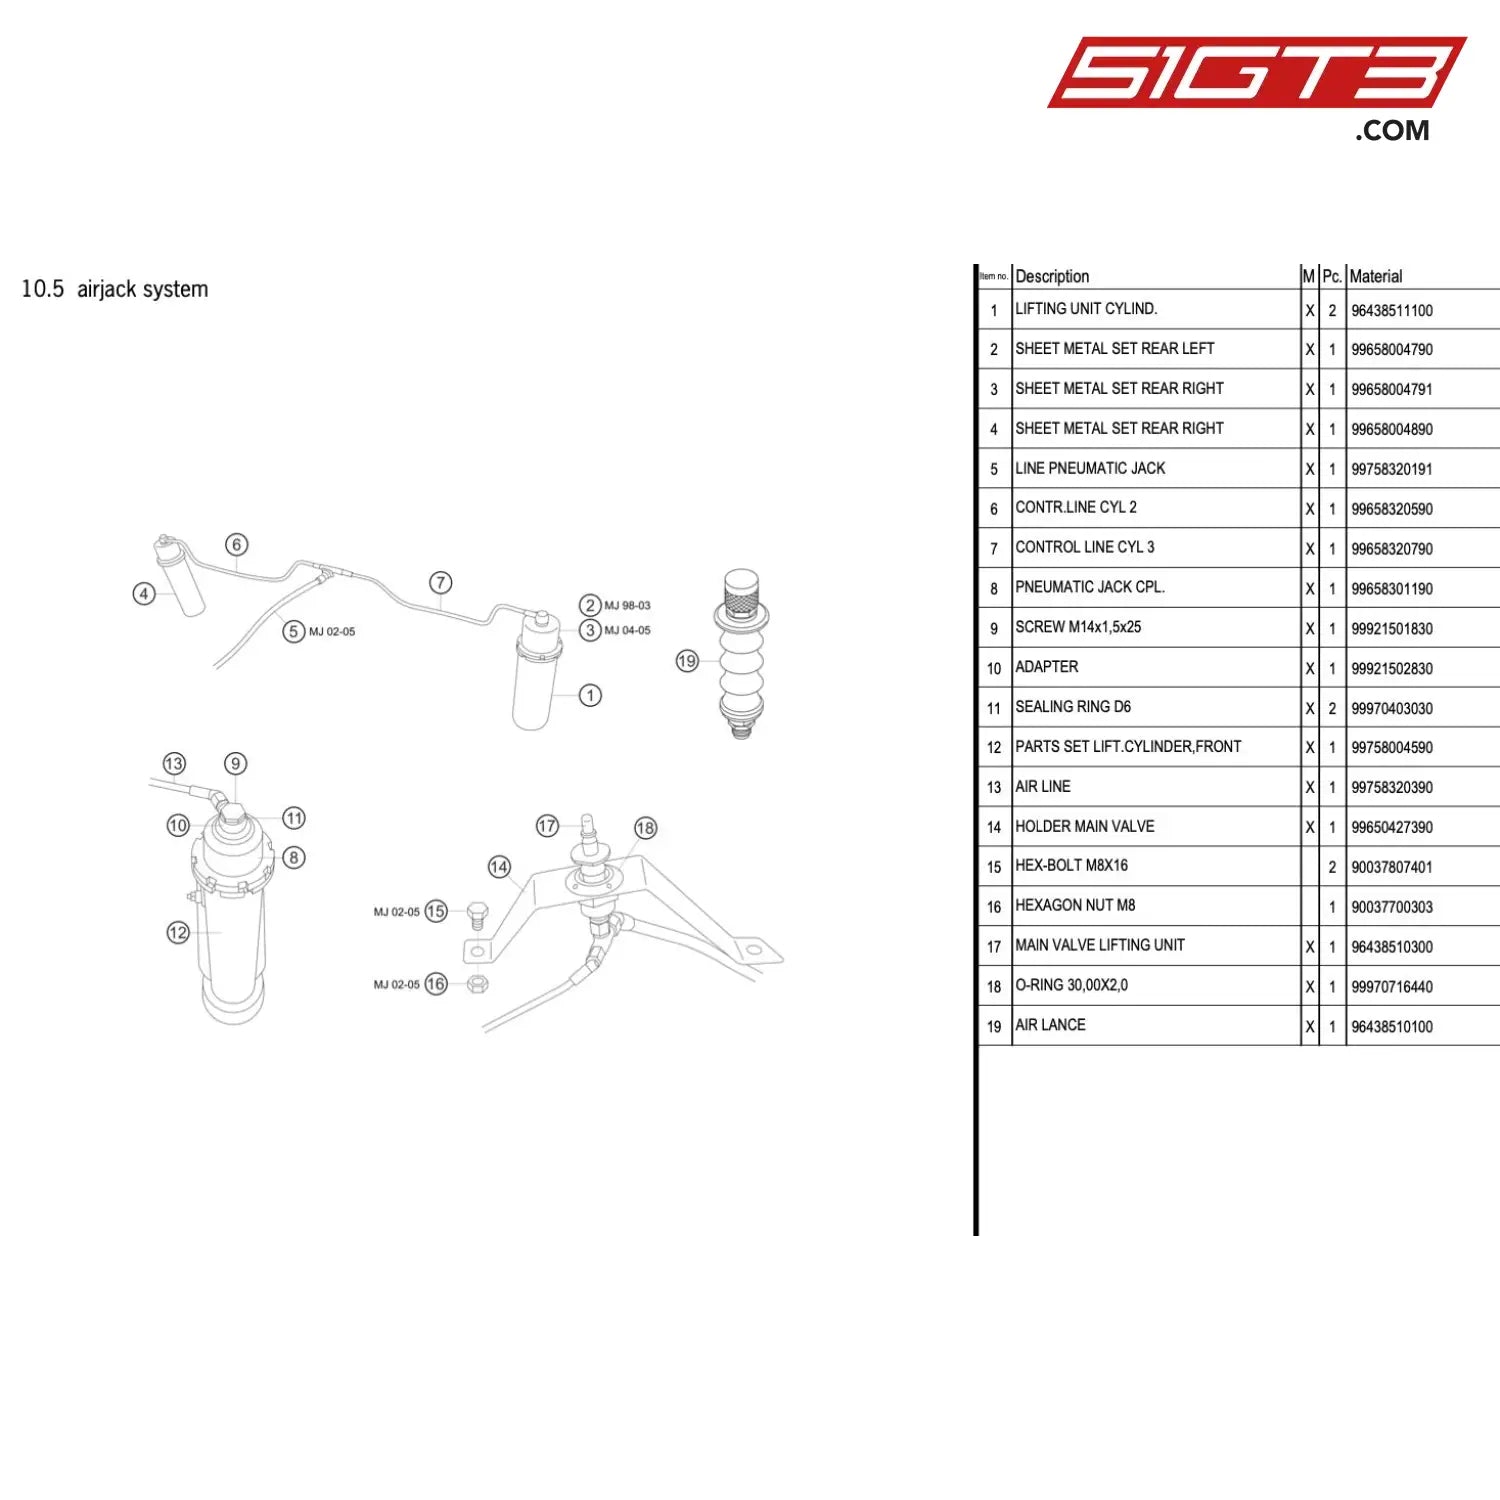 Sheet Metal Set Rear Right - 99658004791 [Porsche 911 Gt3 Cup Type 996] Airjack System